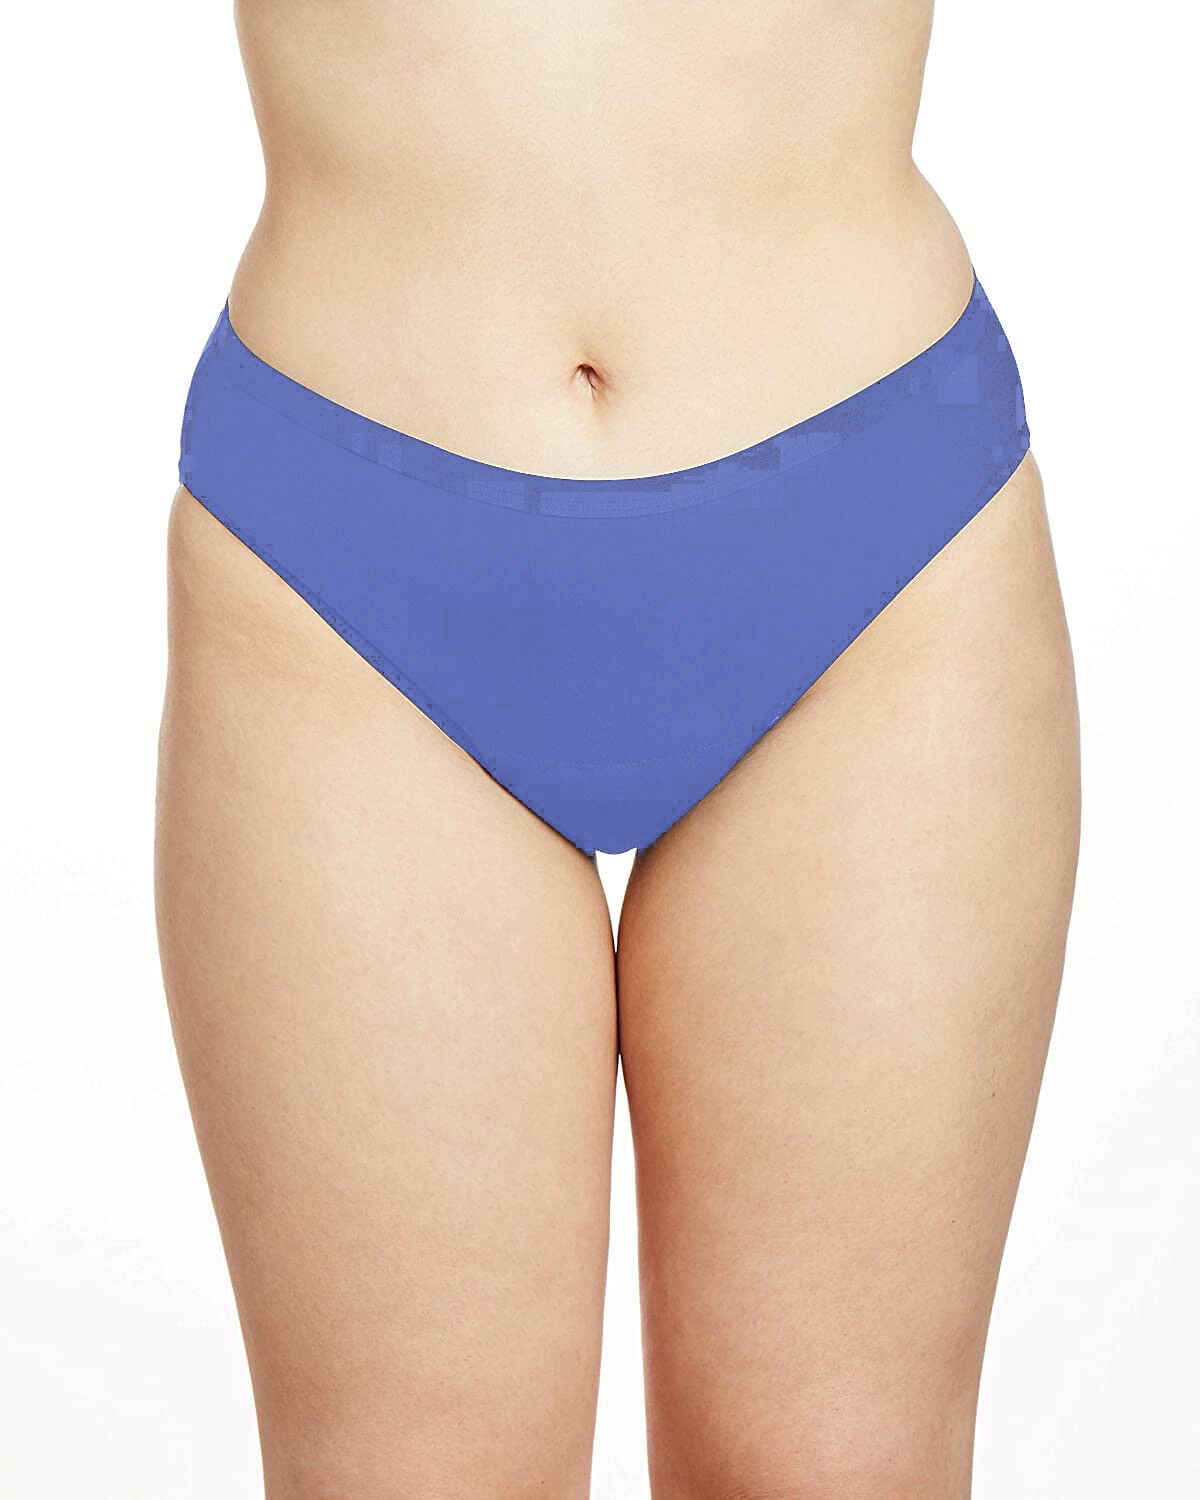 Speax, French Cut Thinx Womens Underwear For Bladder Leak Protection